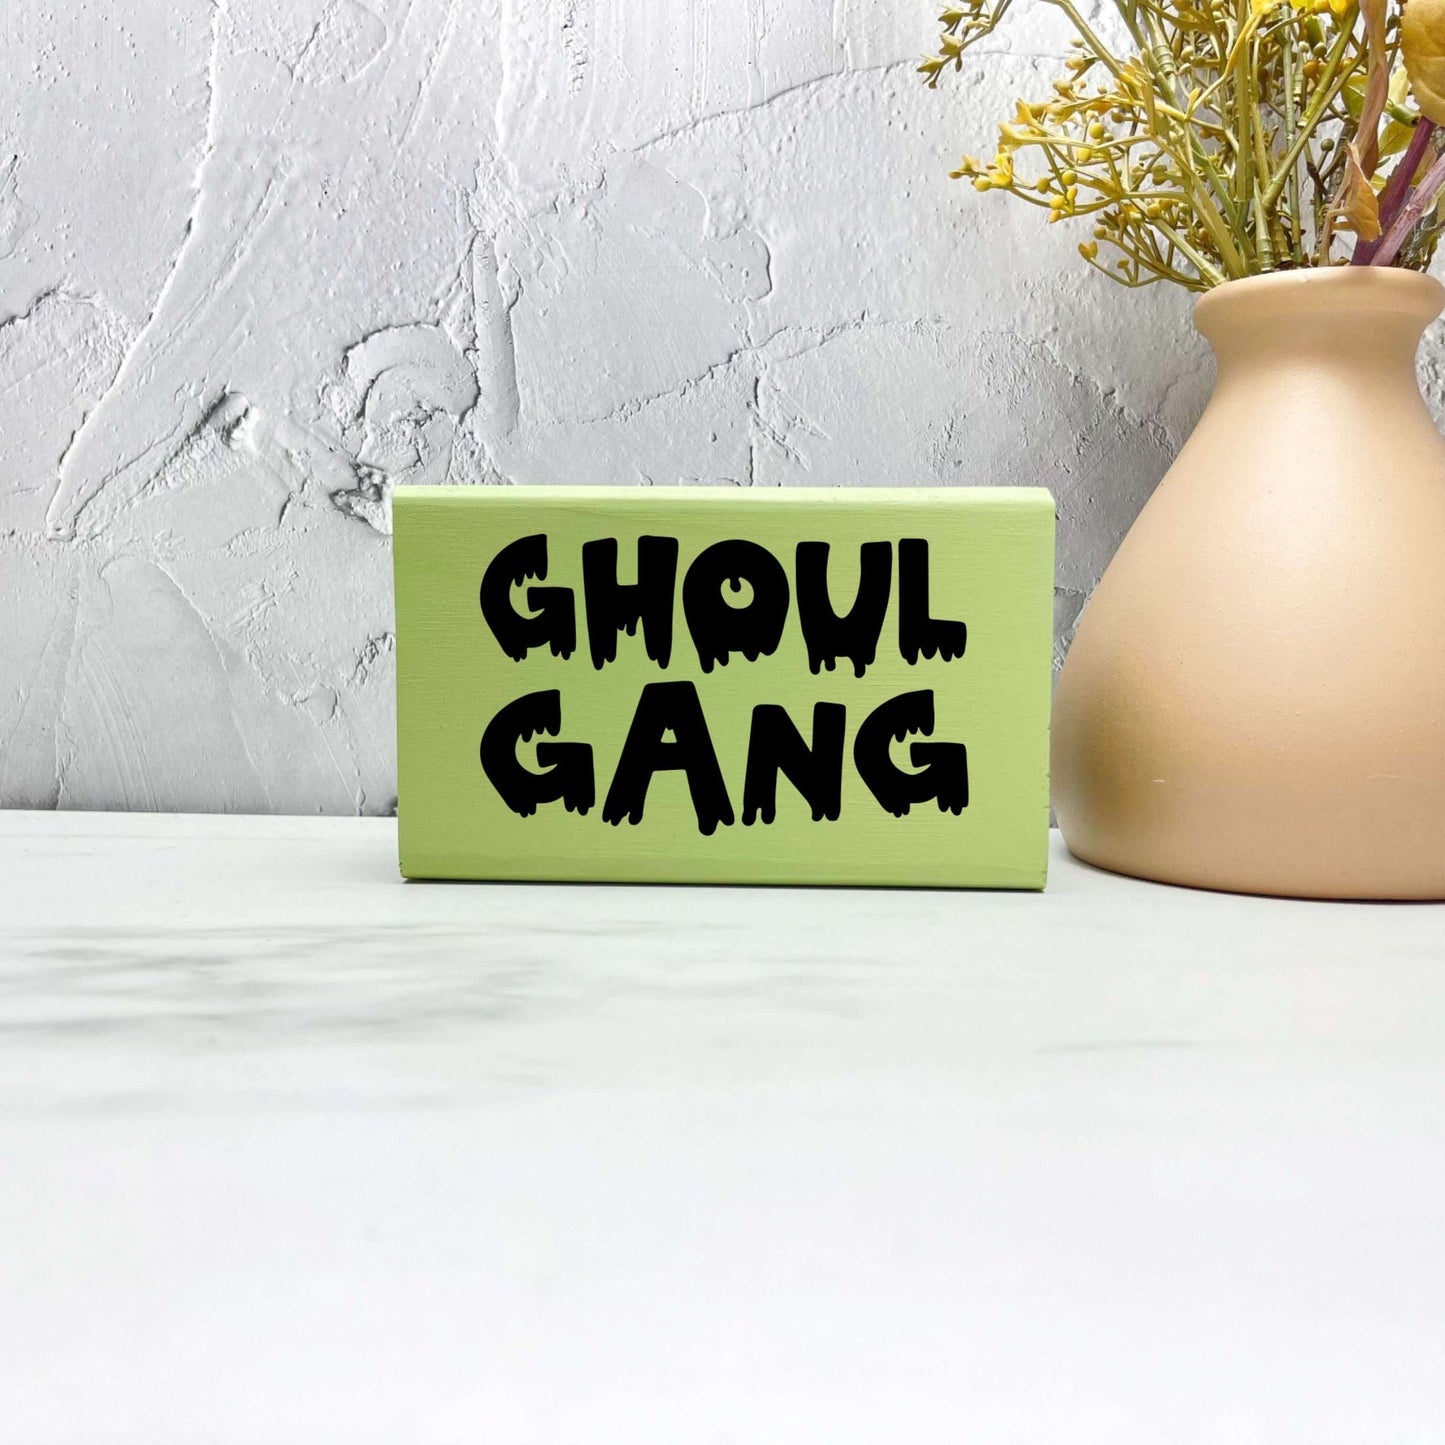 Ghoul gang Sign, Halloween Wood Sign, Halloween Home Decor, Spooky Decor